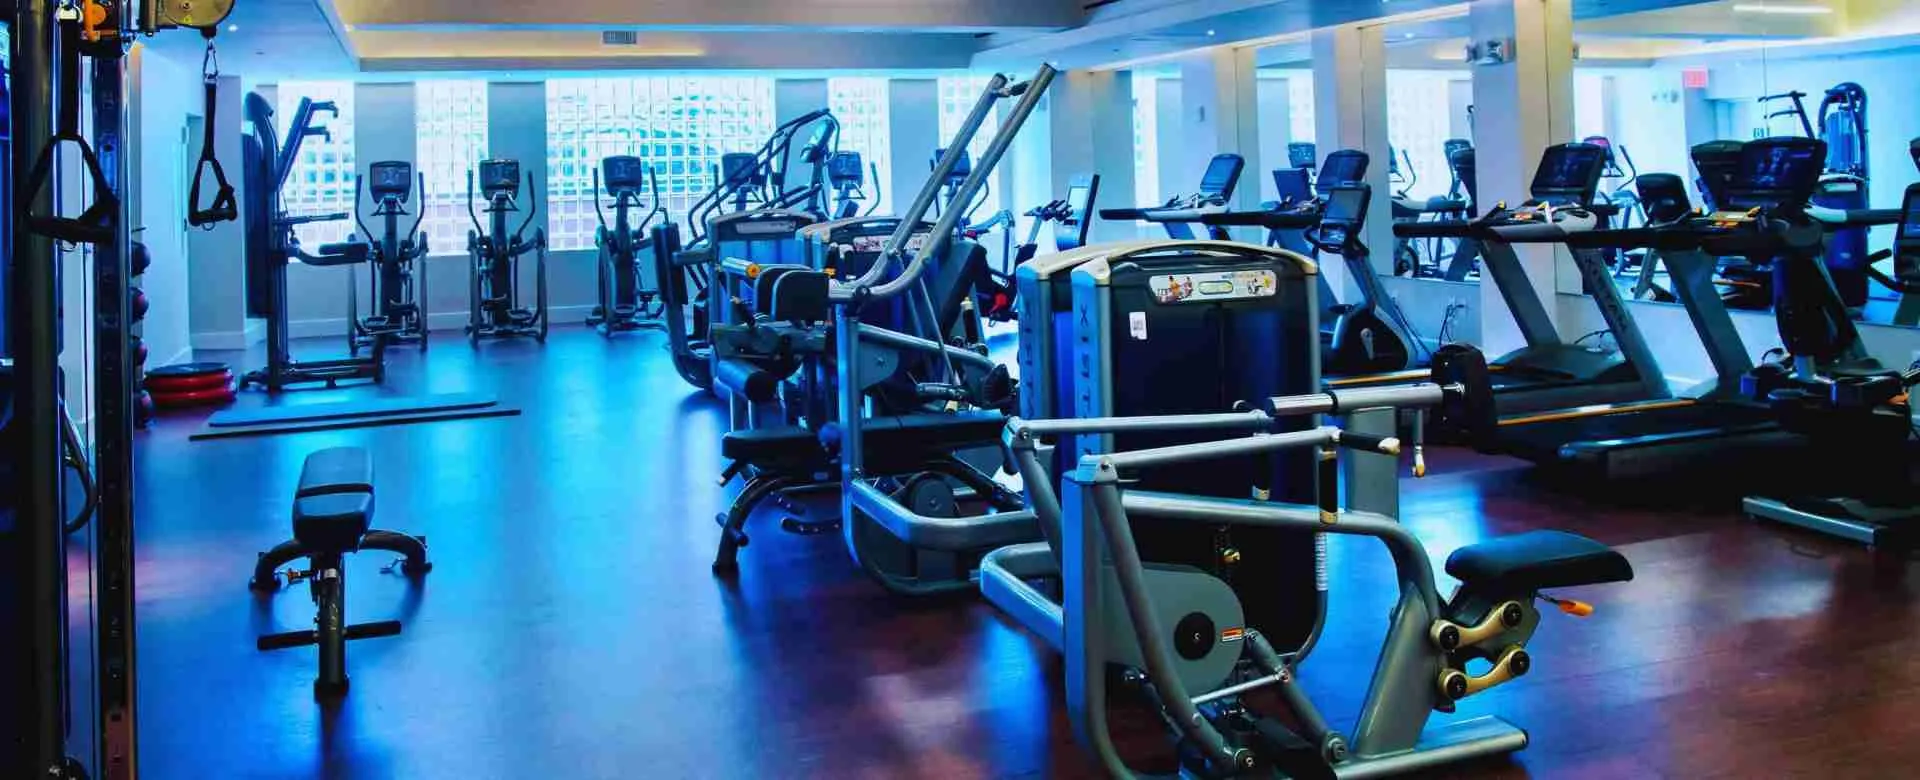 best hotel gyms in new york city - Marriott